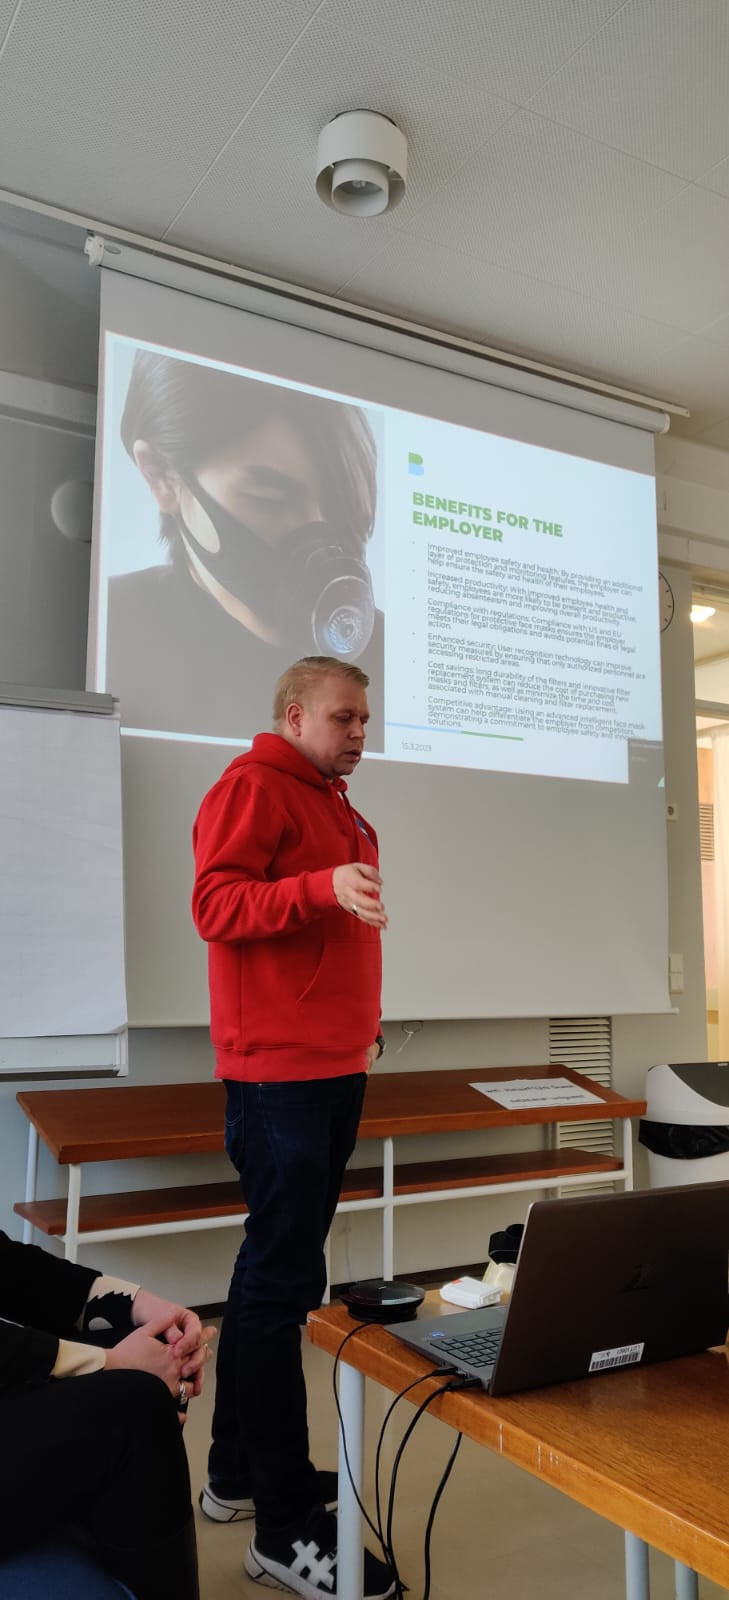 Bioprot Innovation Workshop in University of Helsinki